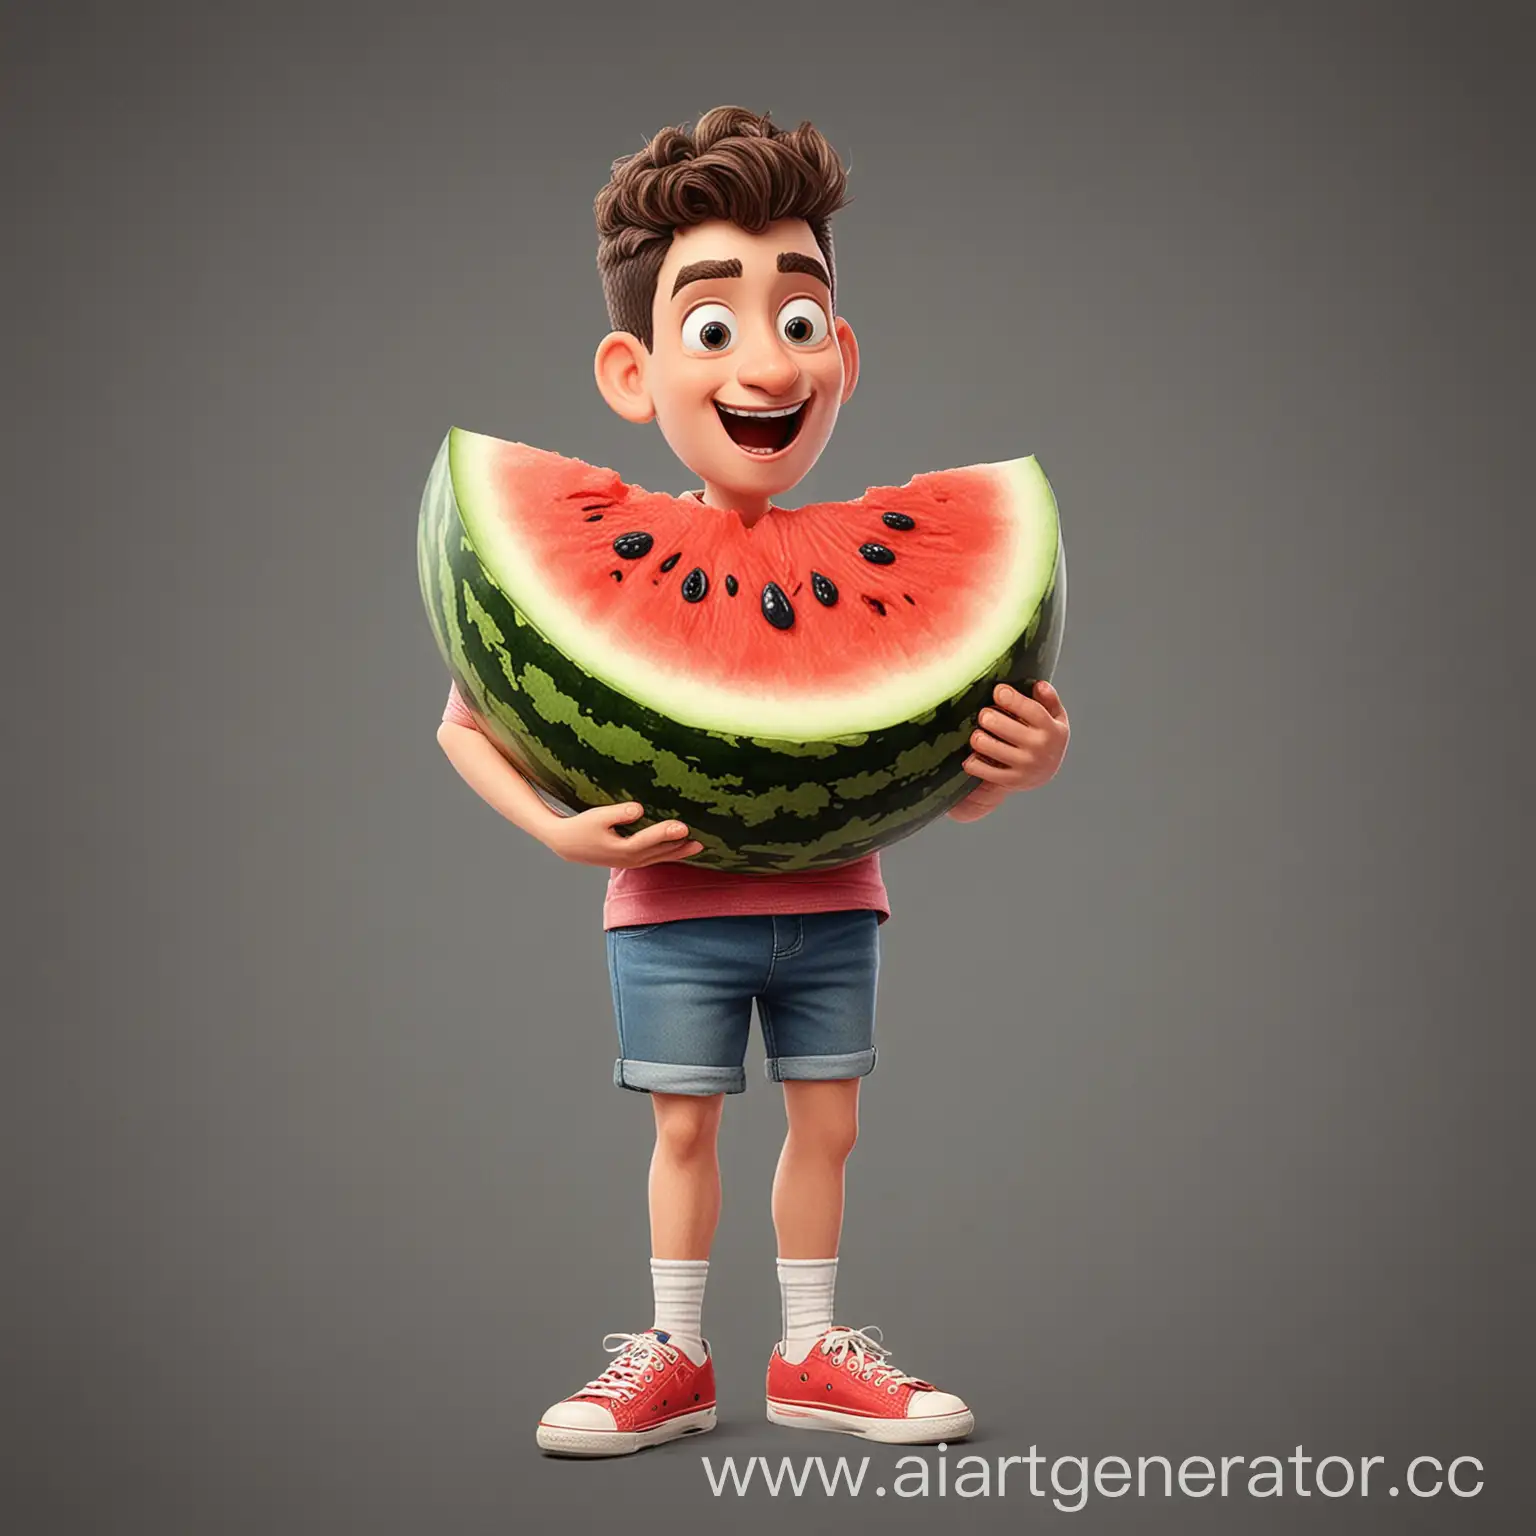 Joyful-Cartoon-Character-Holding-a-Watermelon